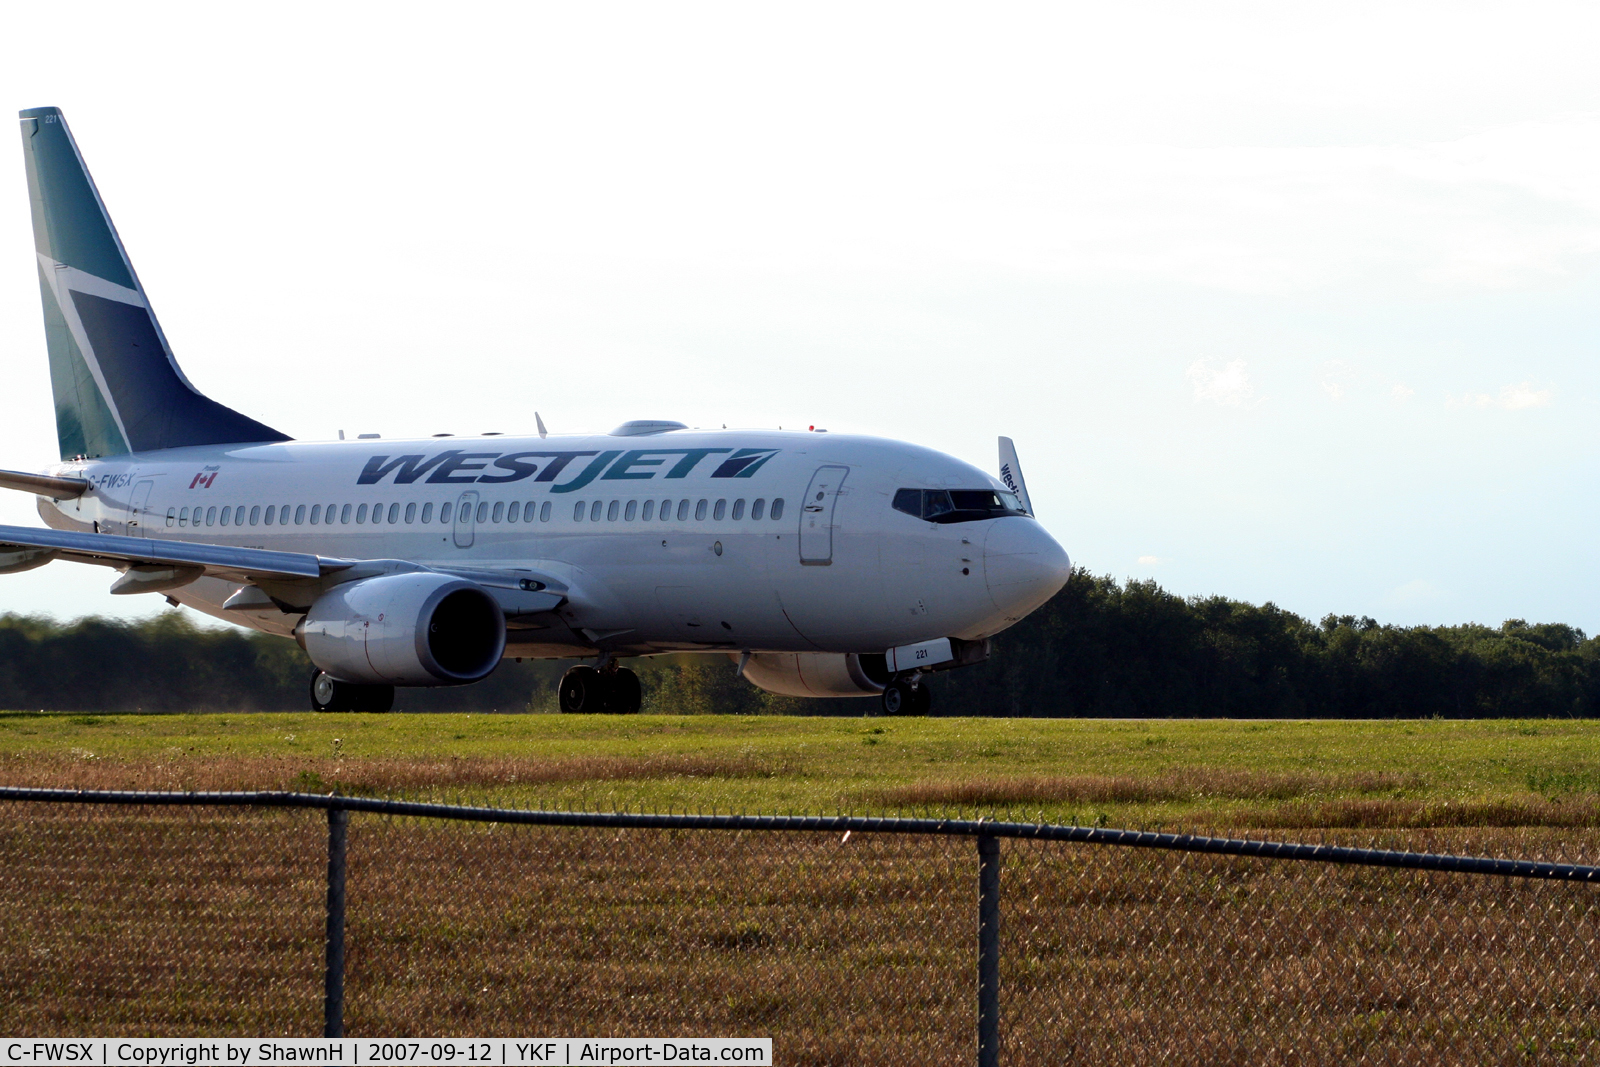 C-FWSX, 2004 Boeing 737-7CT C/N 32761, Taixing to runway 25, Flight to Calgary